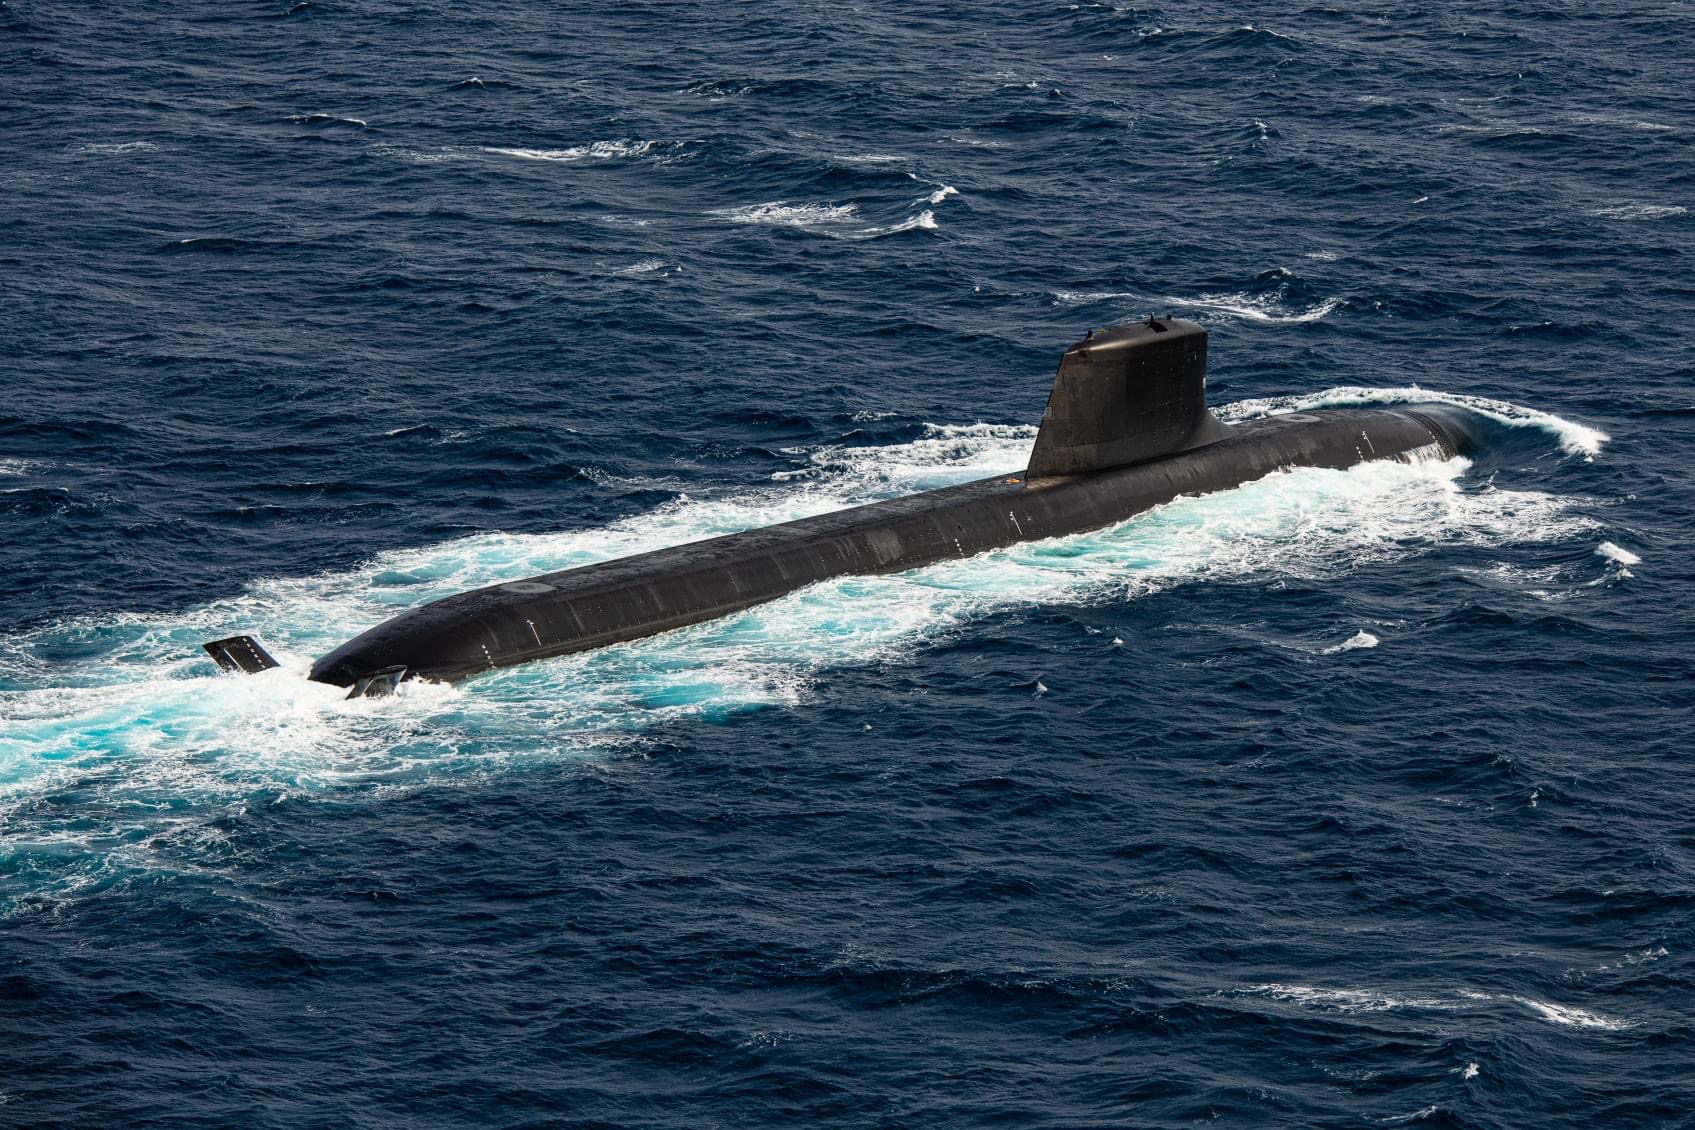 Barracuda-class sub 